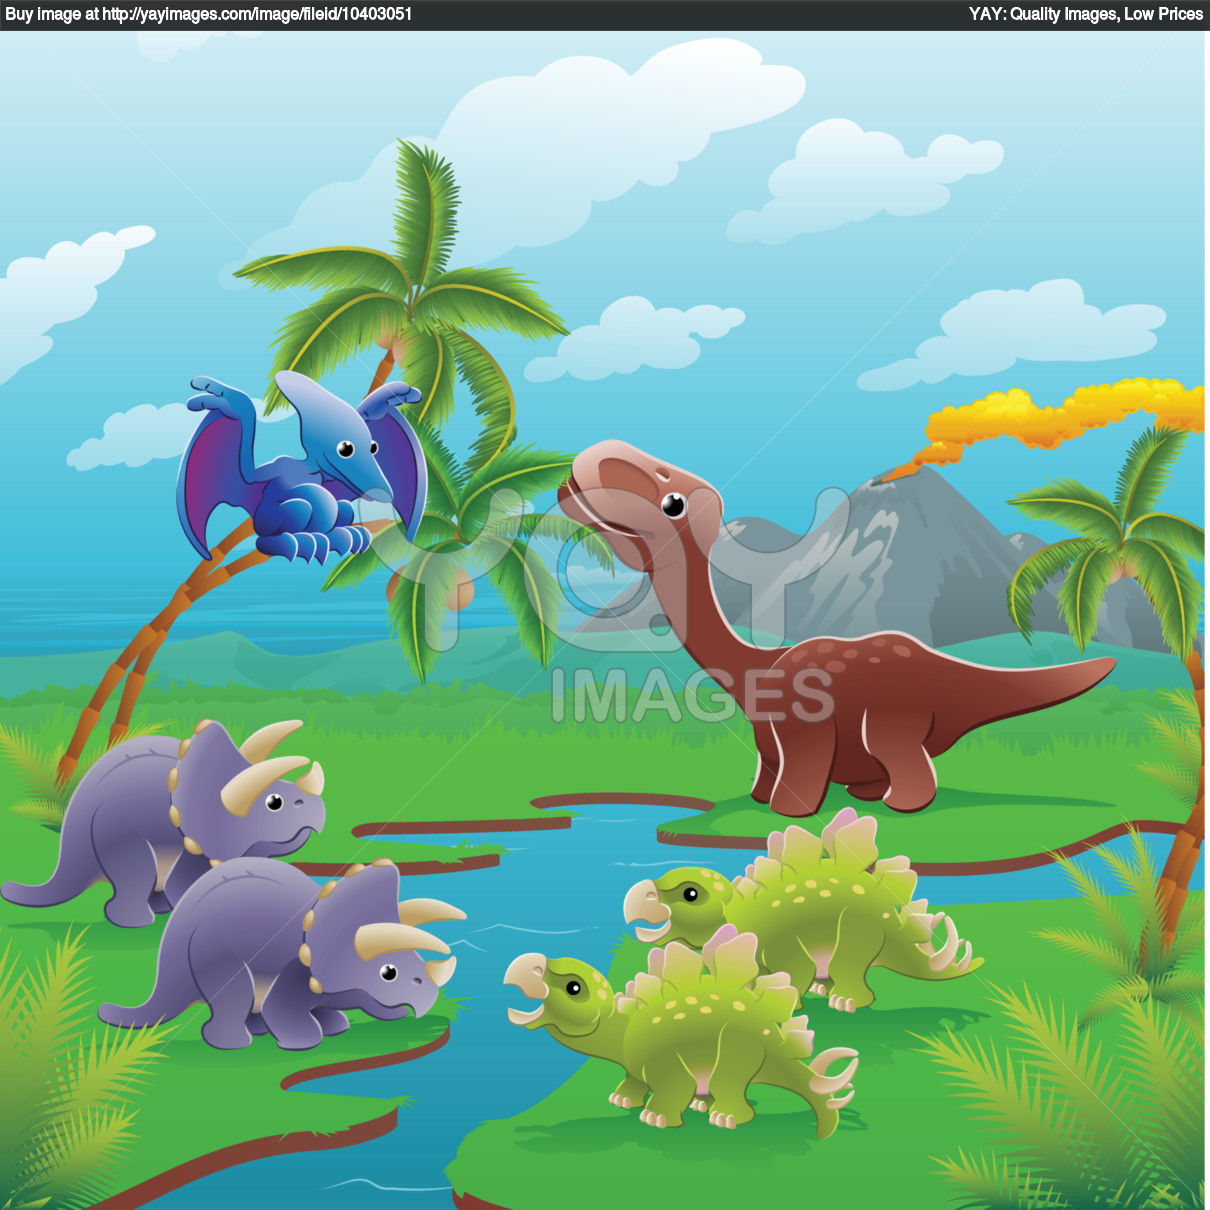 Featured image of post Cartoon Dinosaur Wallpaper Hd Dinosaur wallpapers backgrounds images 1920x1080 best dinosaur desktop wallpaper sort wallpapers by